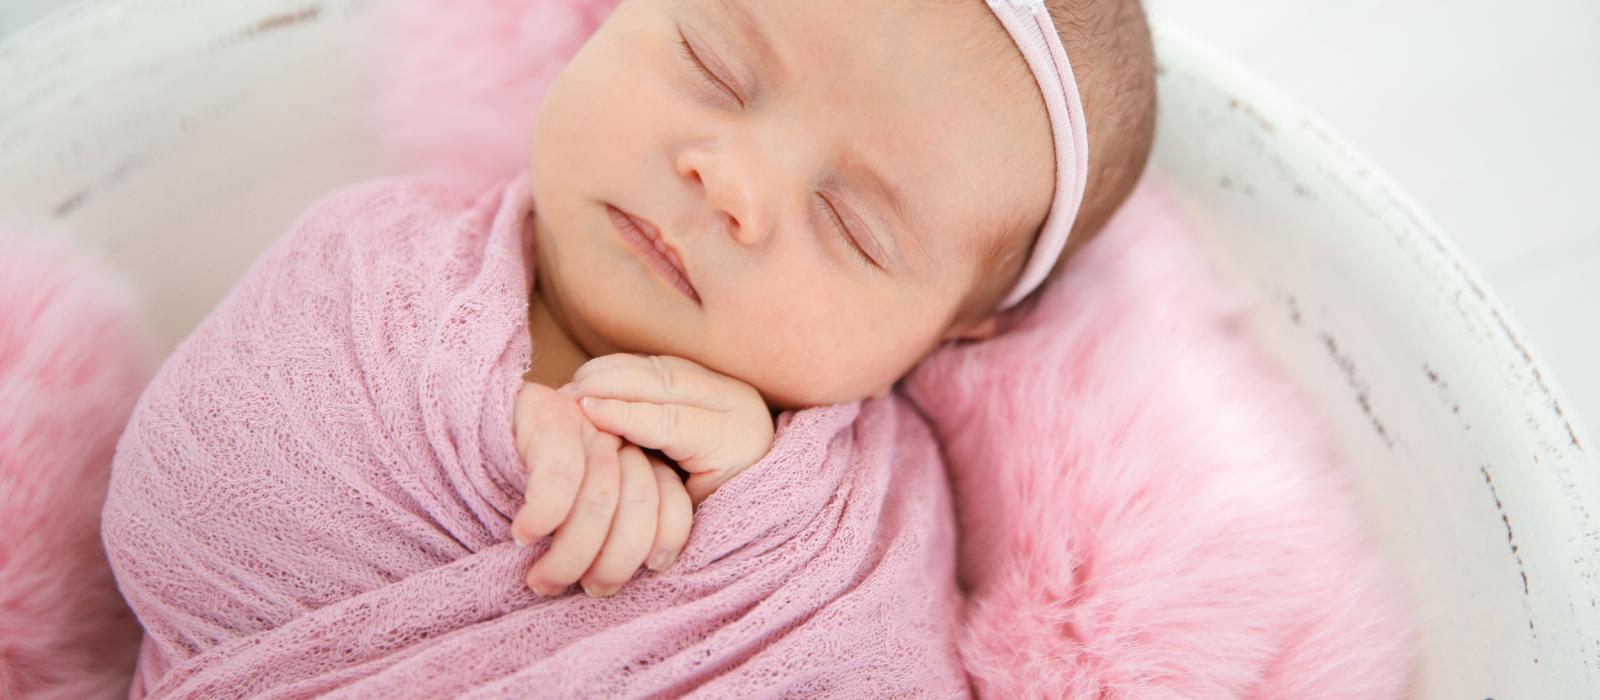 Newborn preventive health visit